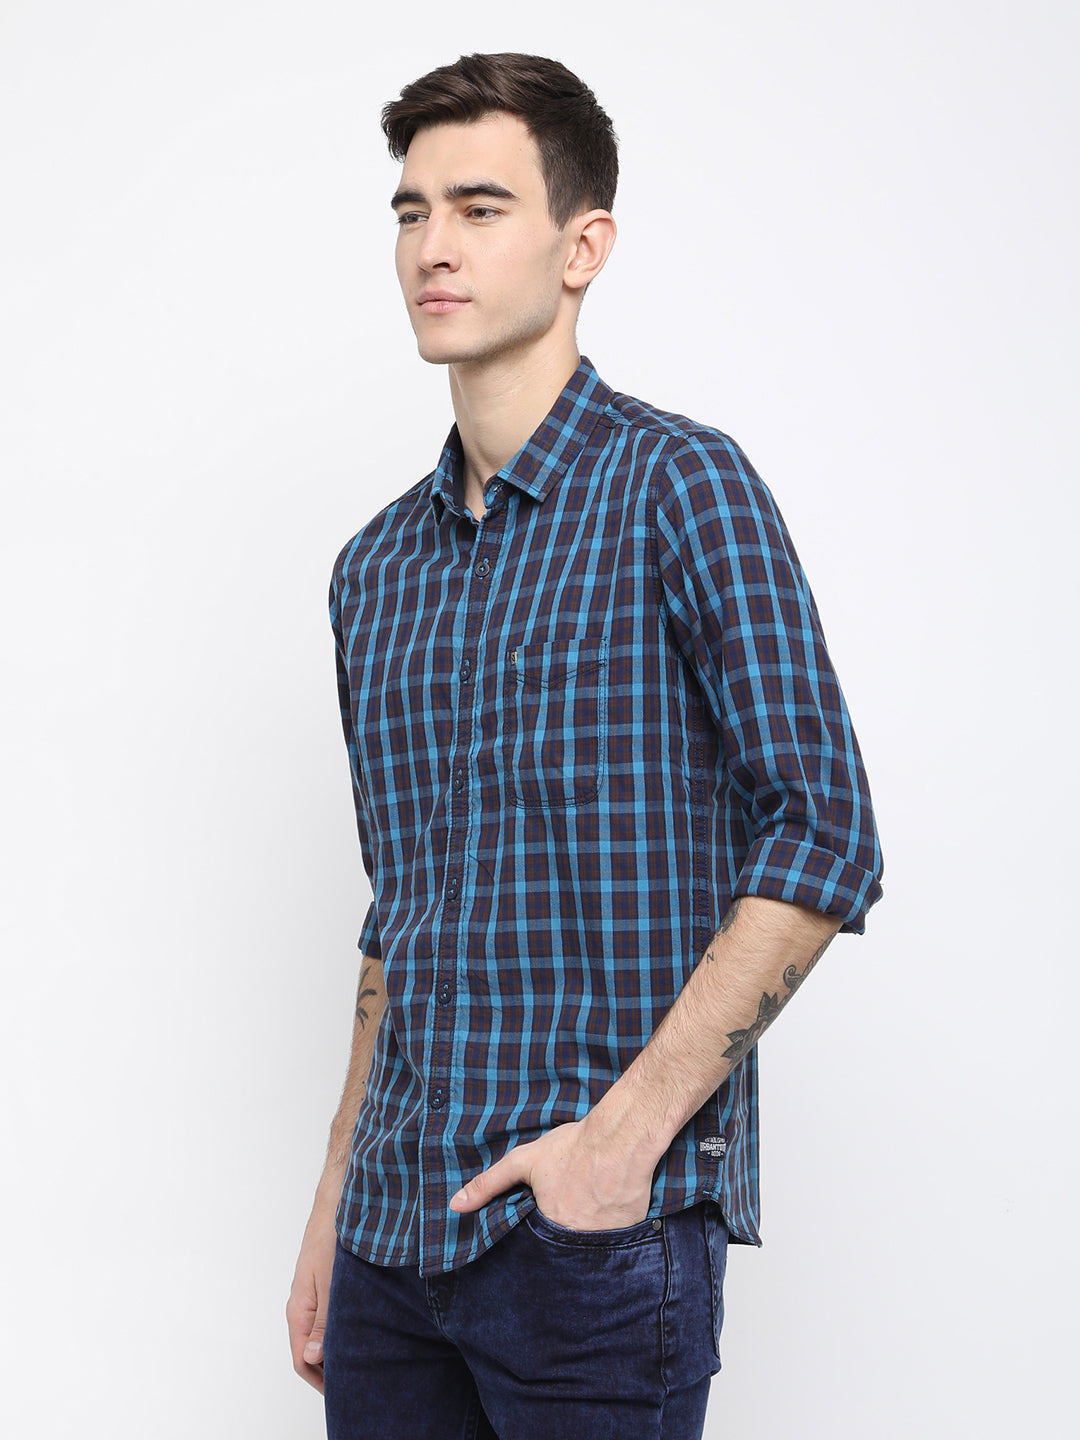 Navy and blue checkered shirt - urban clothing co.